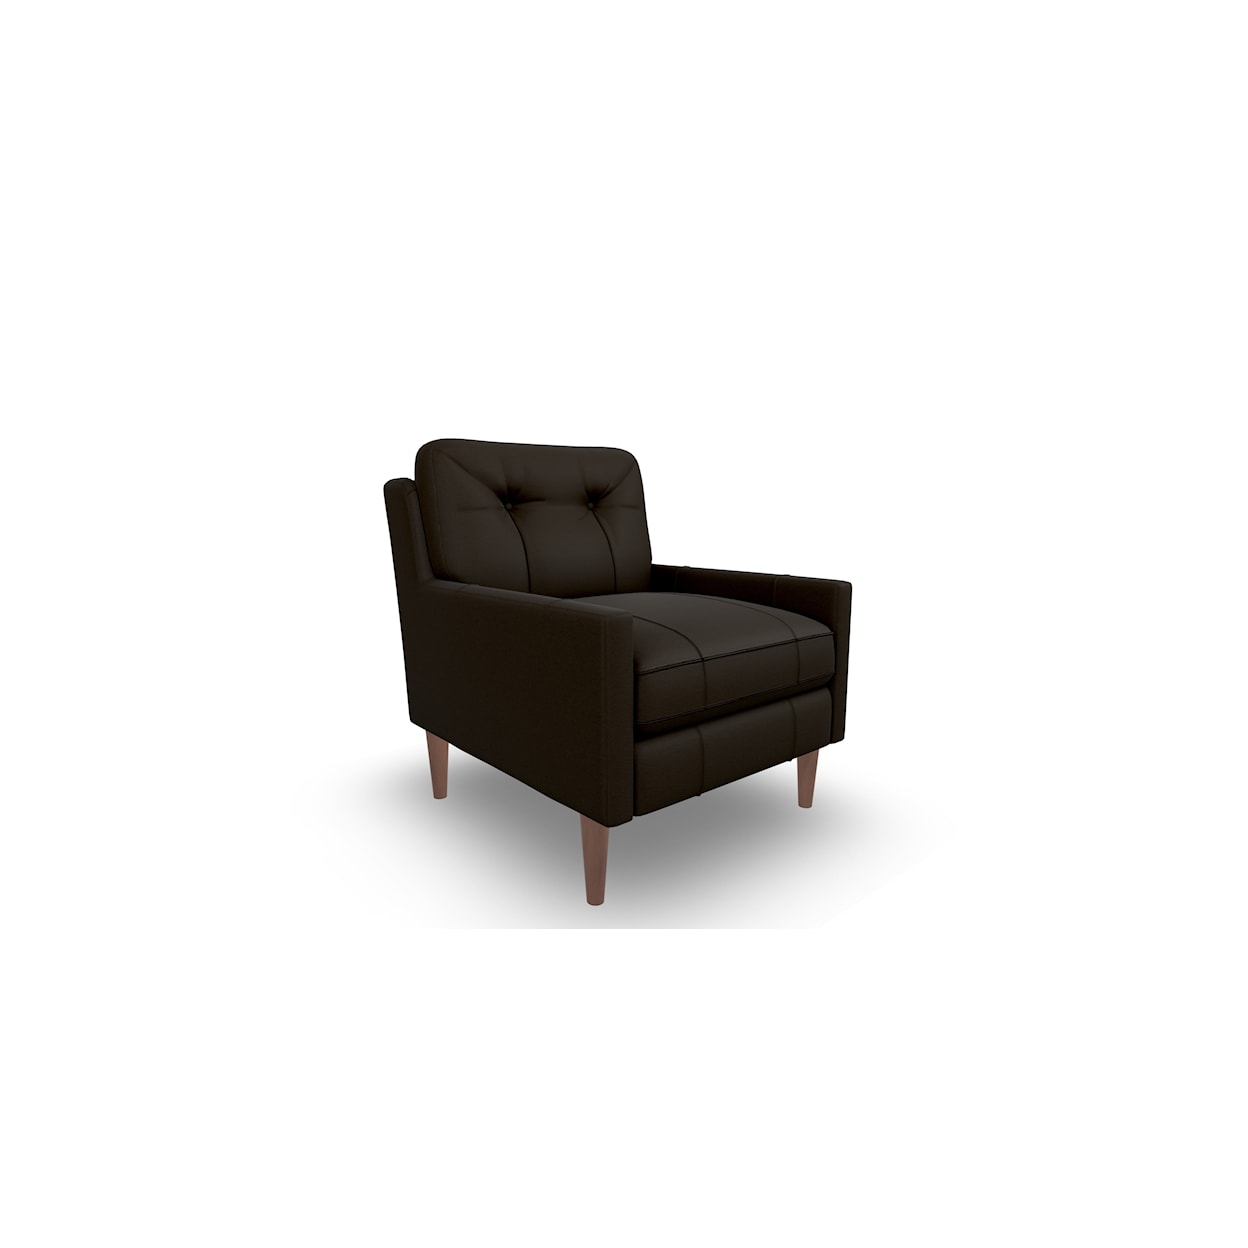 Bravo Furniture Trevin Chair